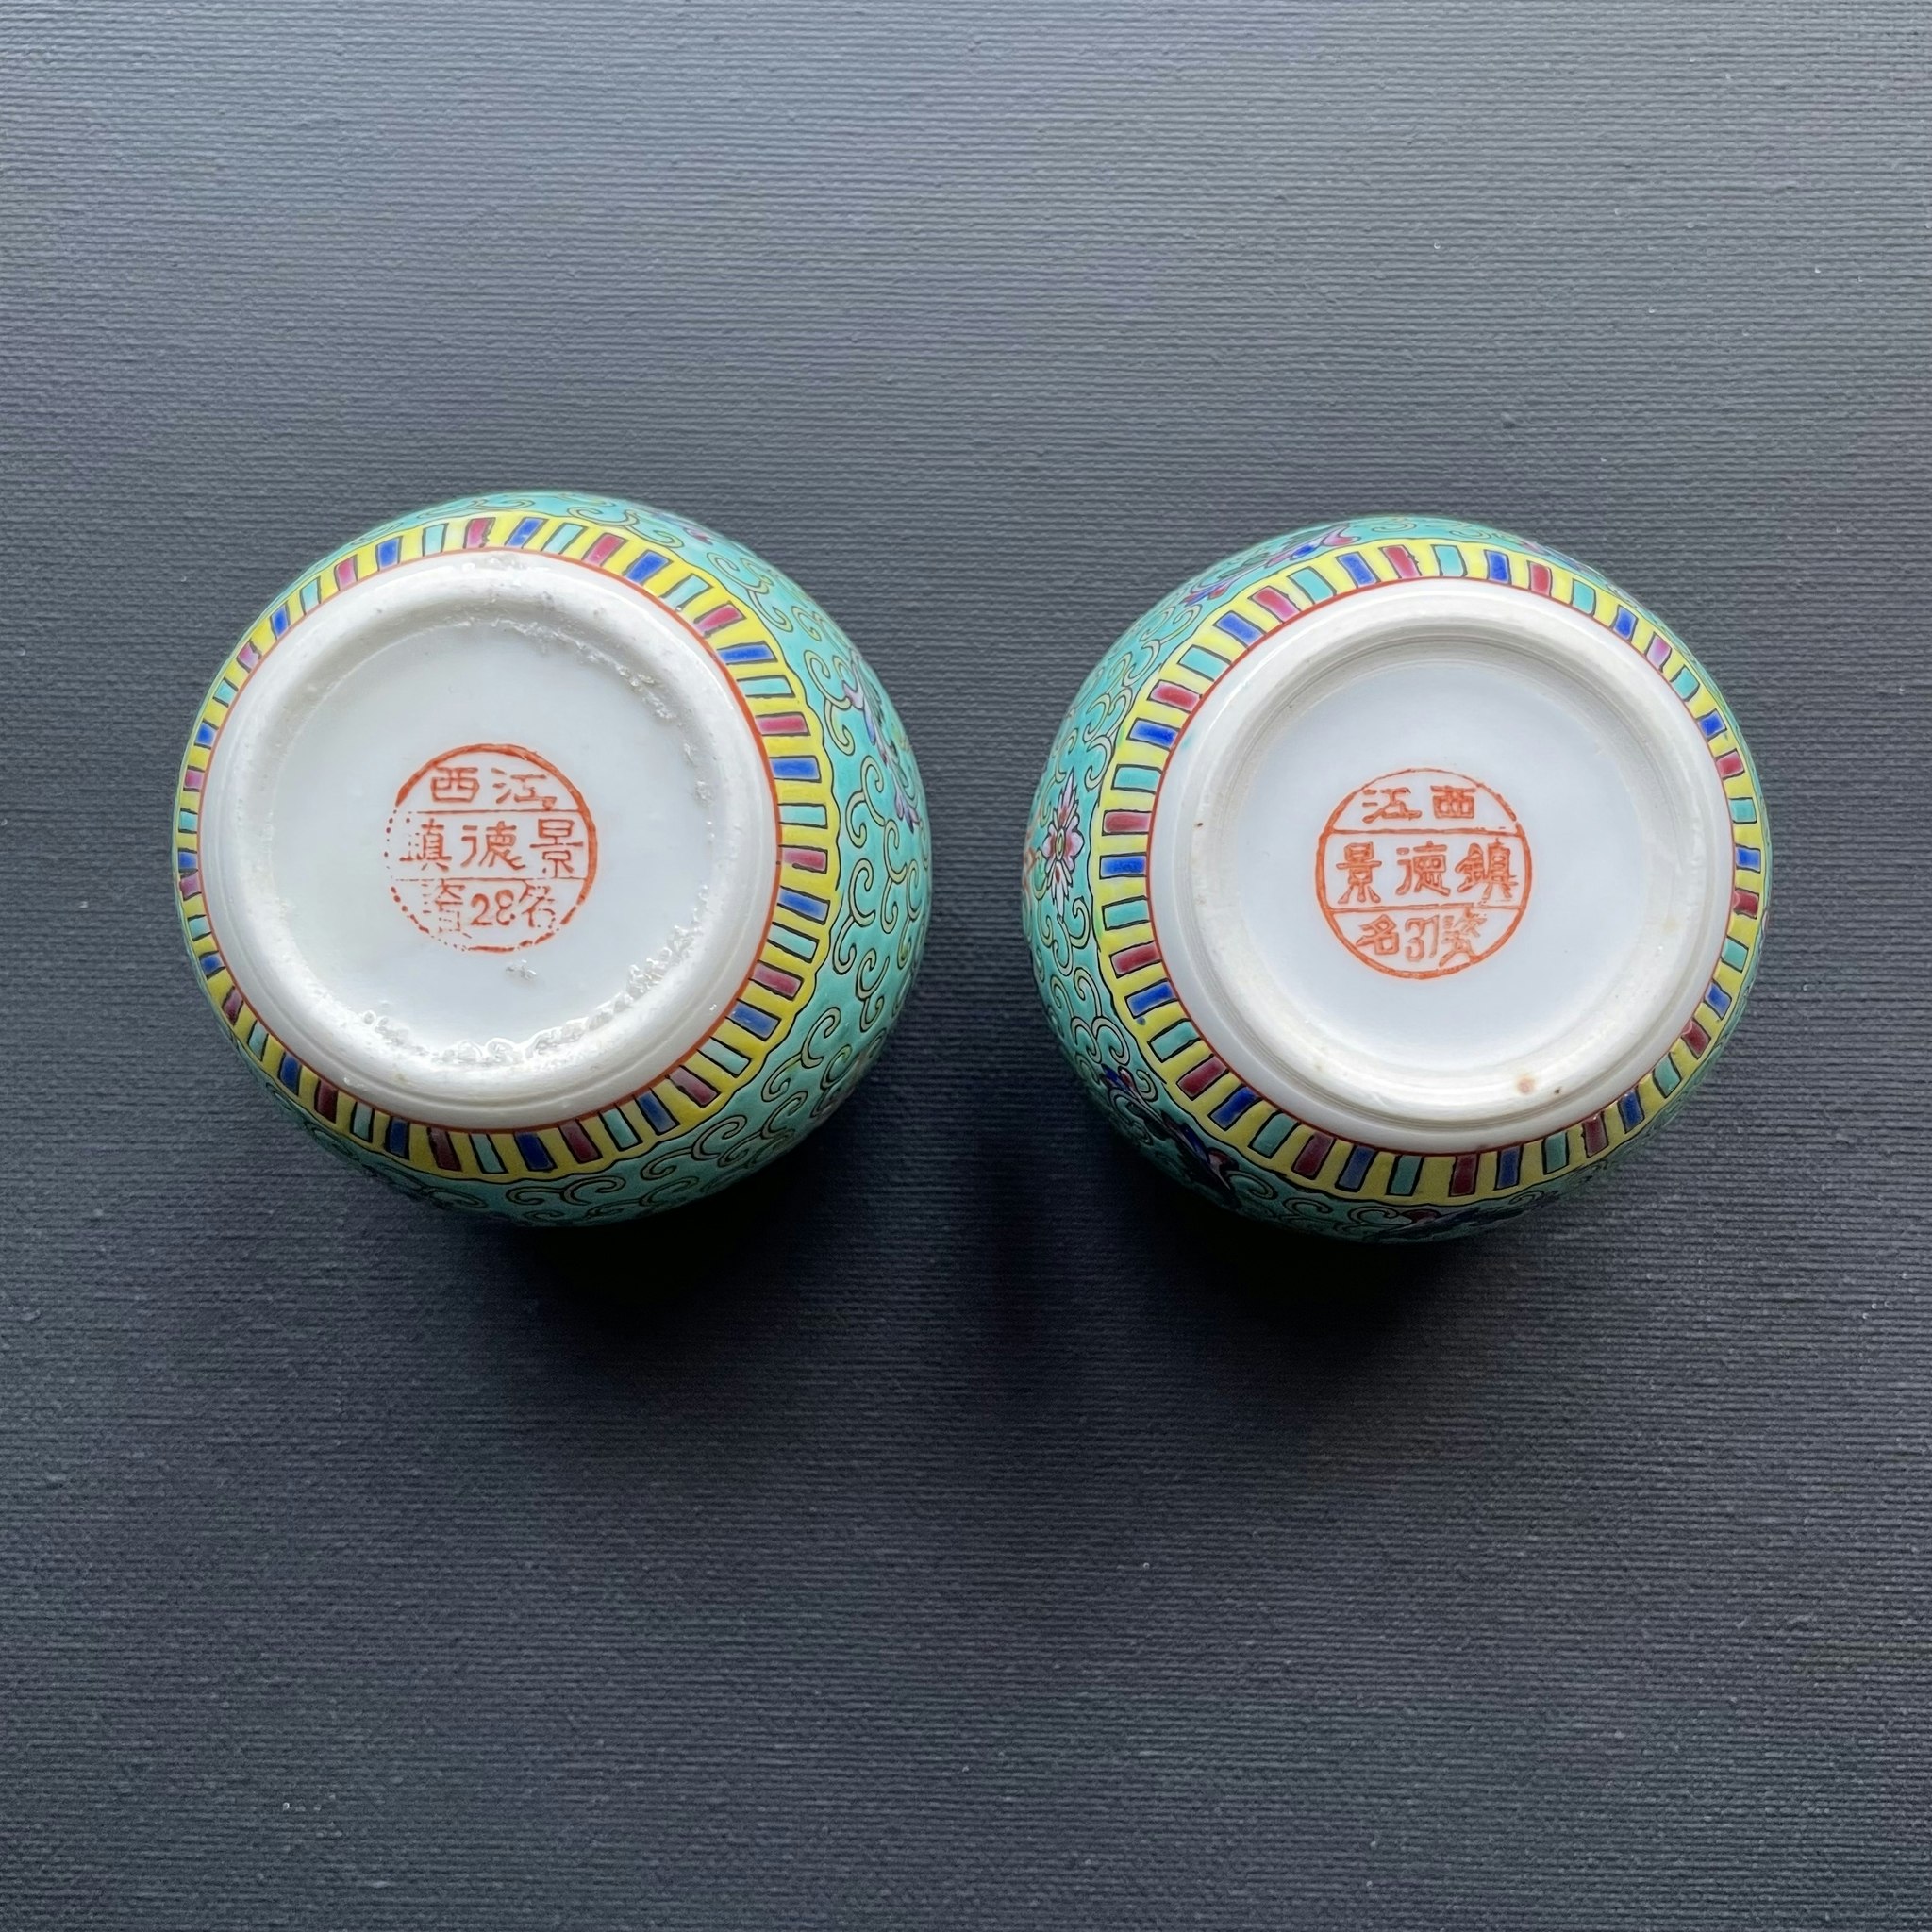 A pair of vintage Chinese miniature jars #989, 990